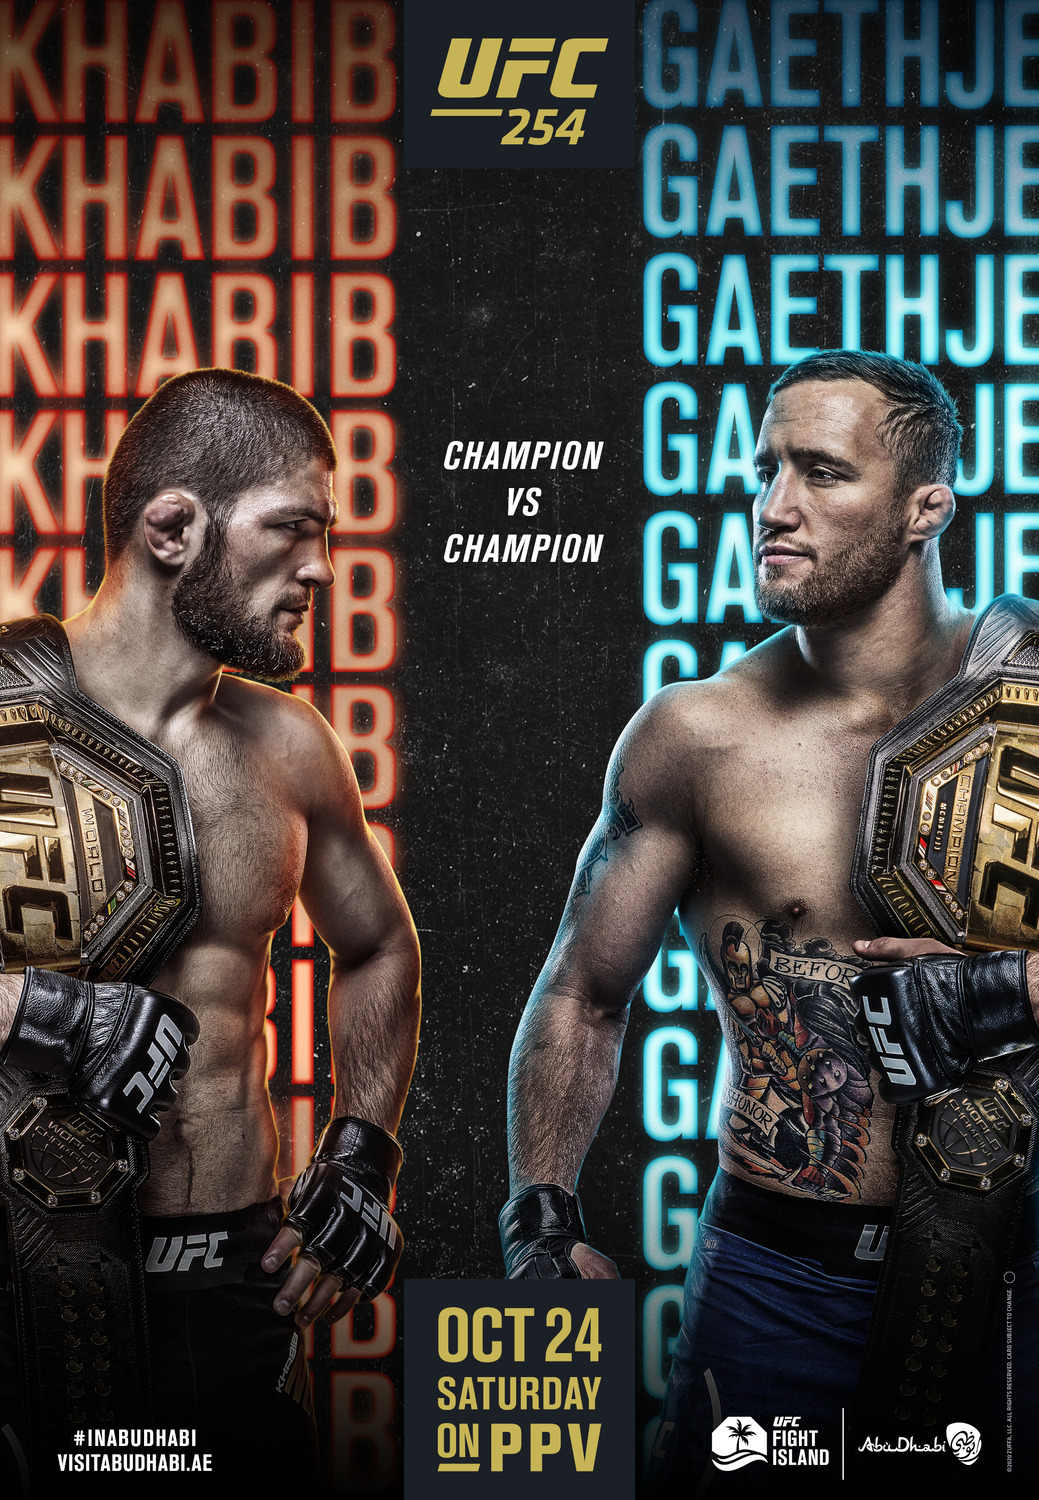 Extra Large TV Poster Image for UFC 254: Khabib vs. Gaethje 